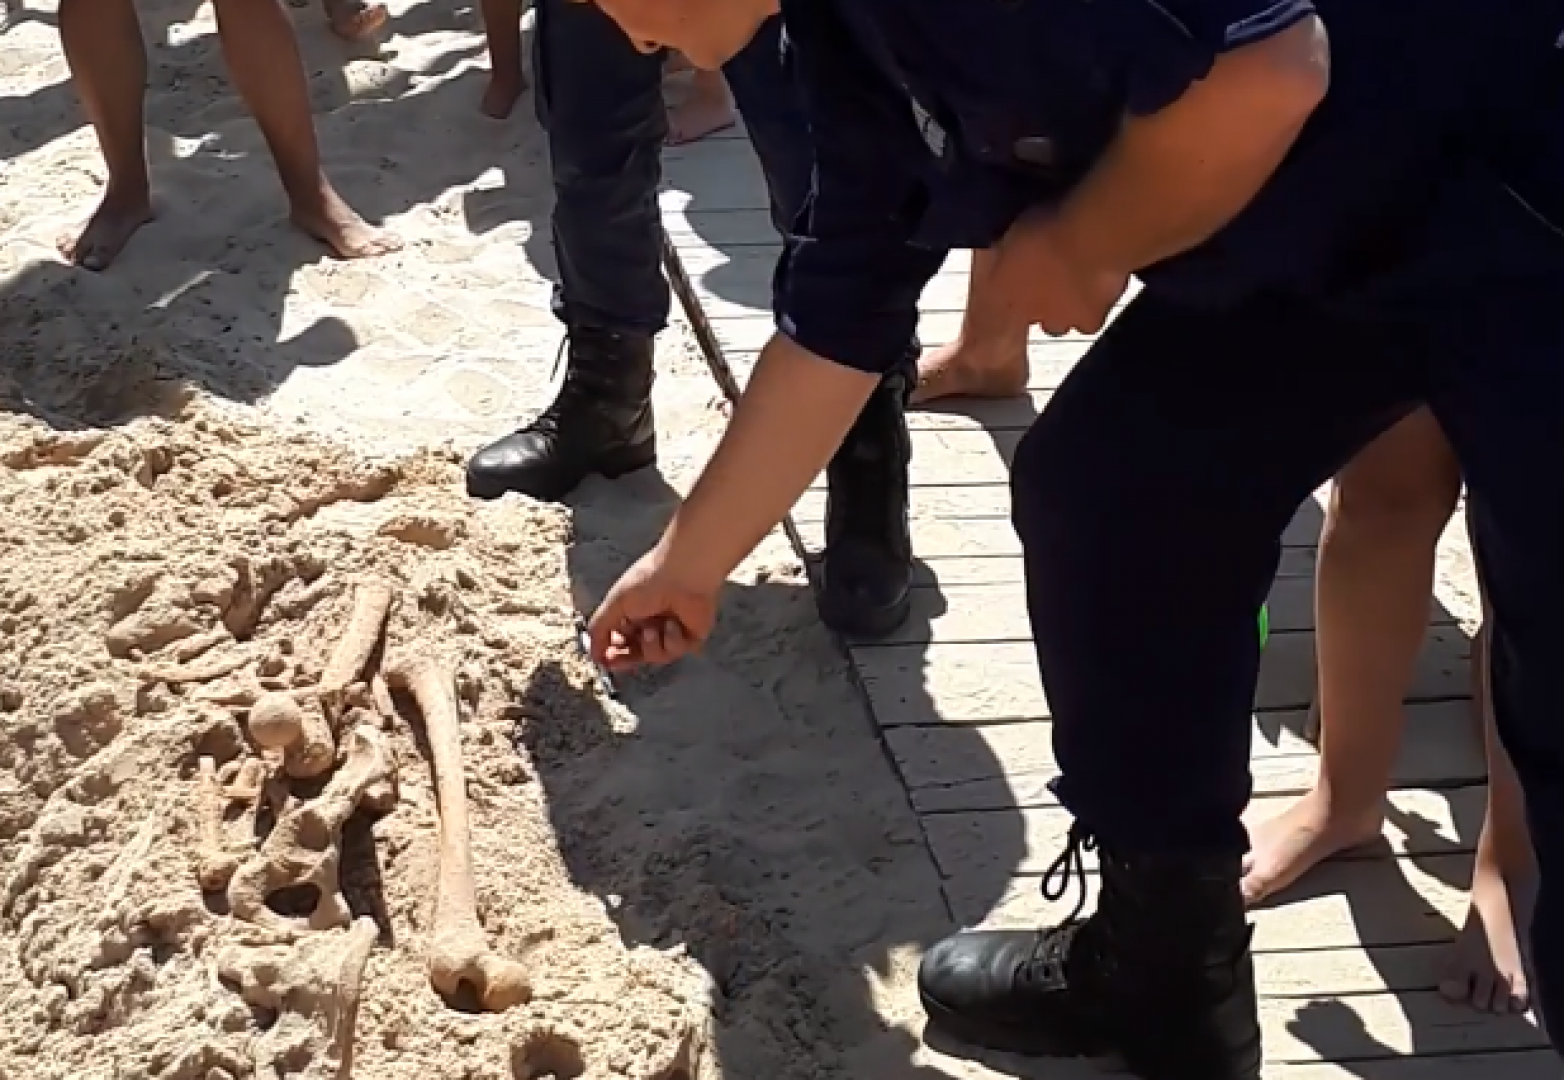 Костите на плажа в Китен били от древен некропол?  - E-Burgas.com